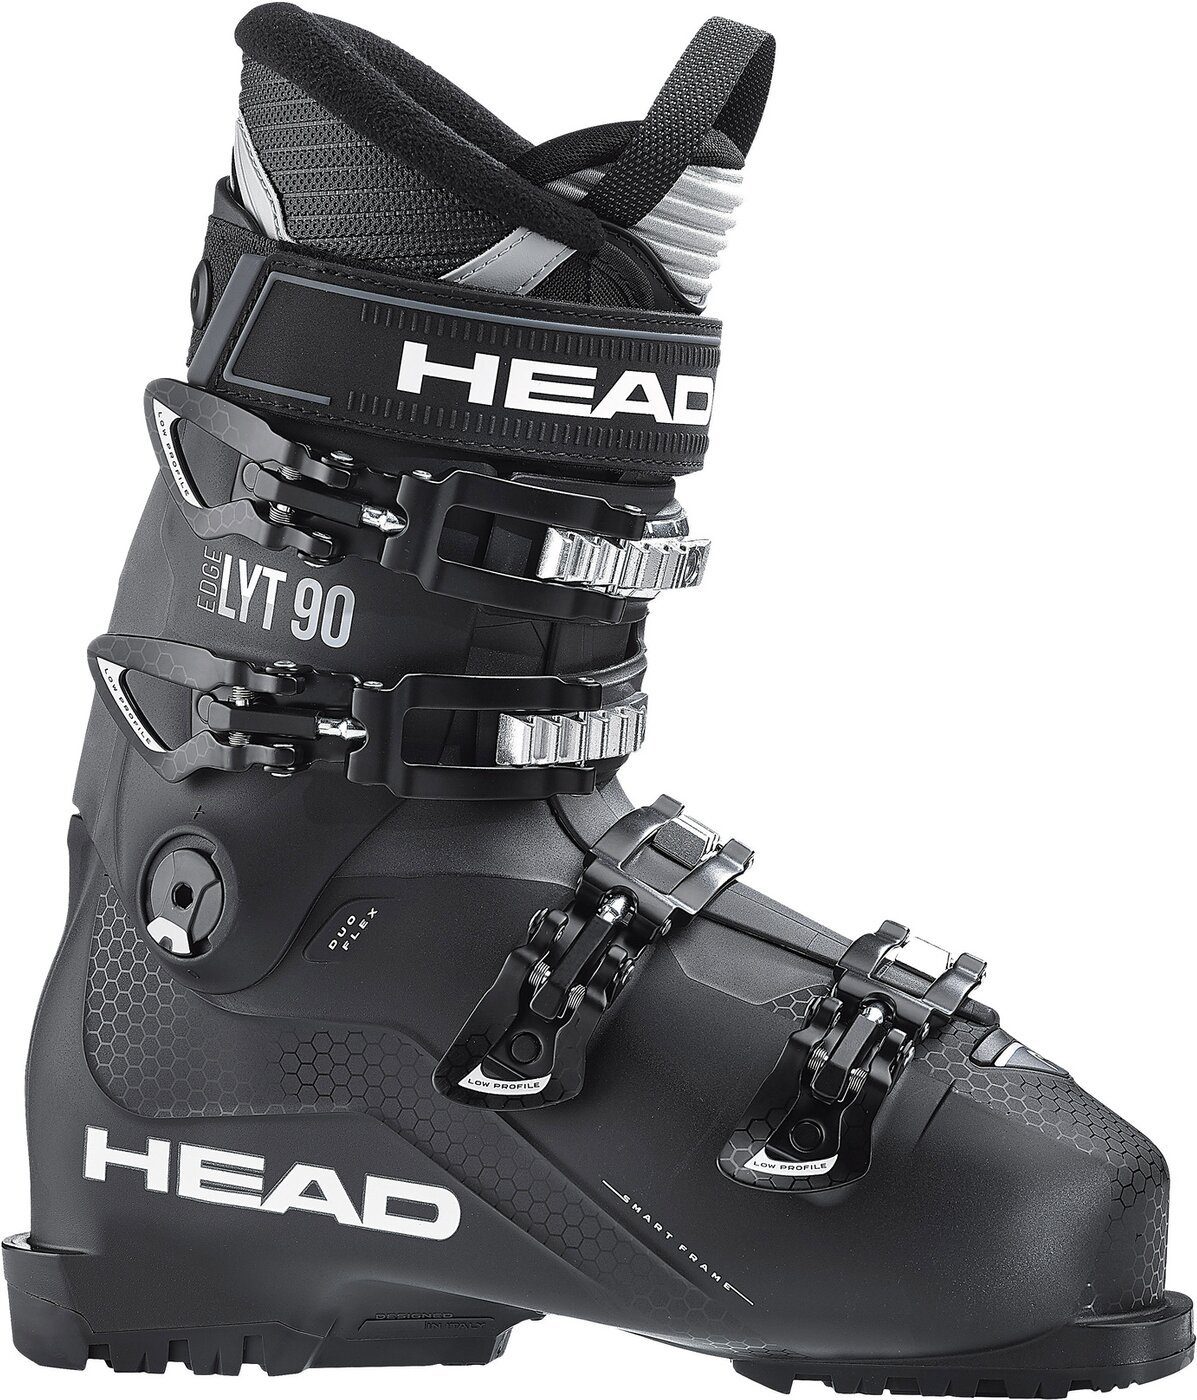 Head Ski EDGE LYT 90 BLACK / ANTHRACITE -